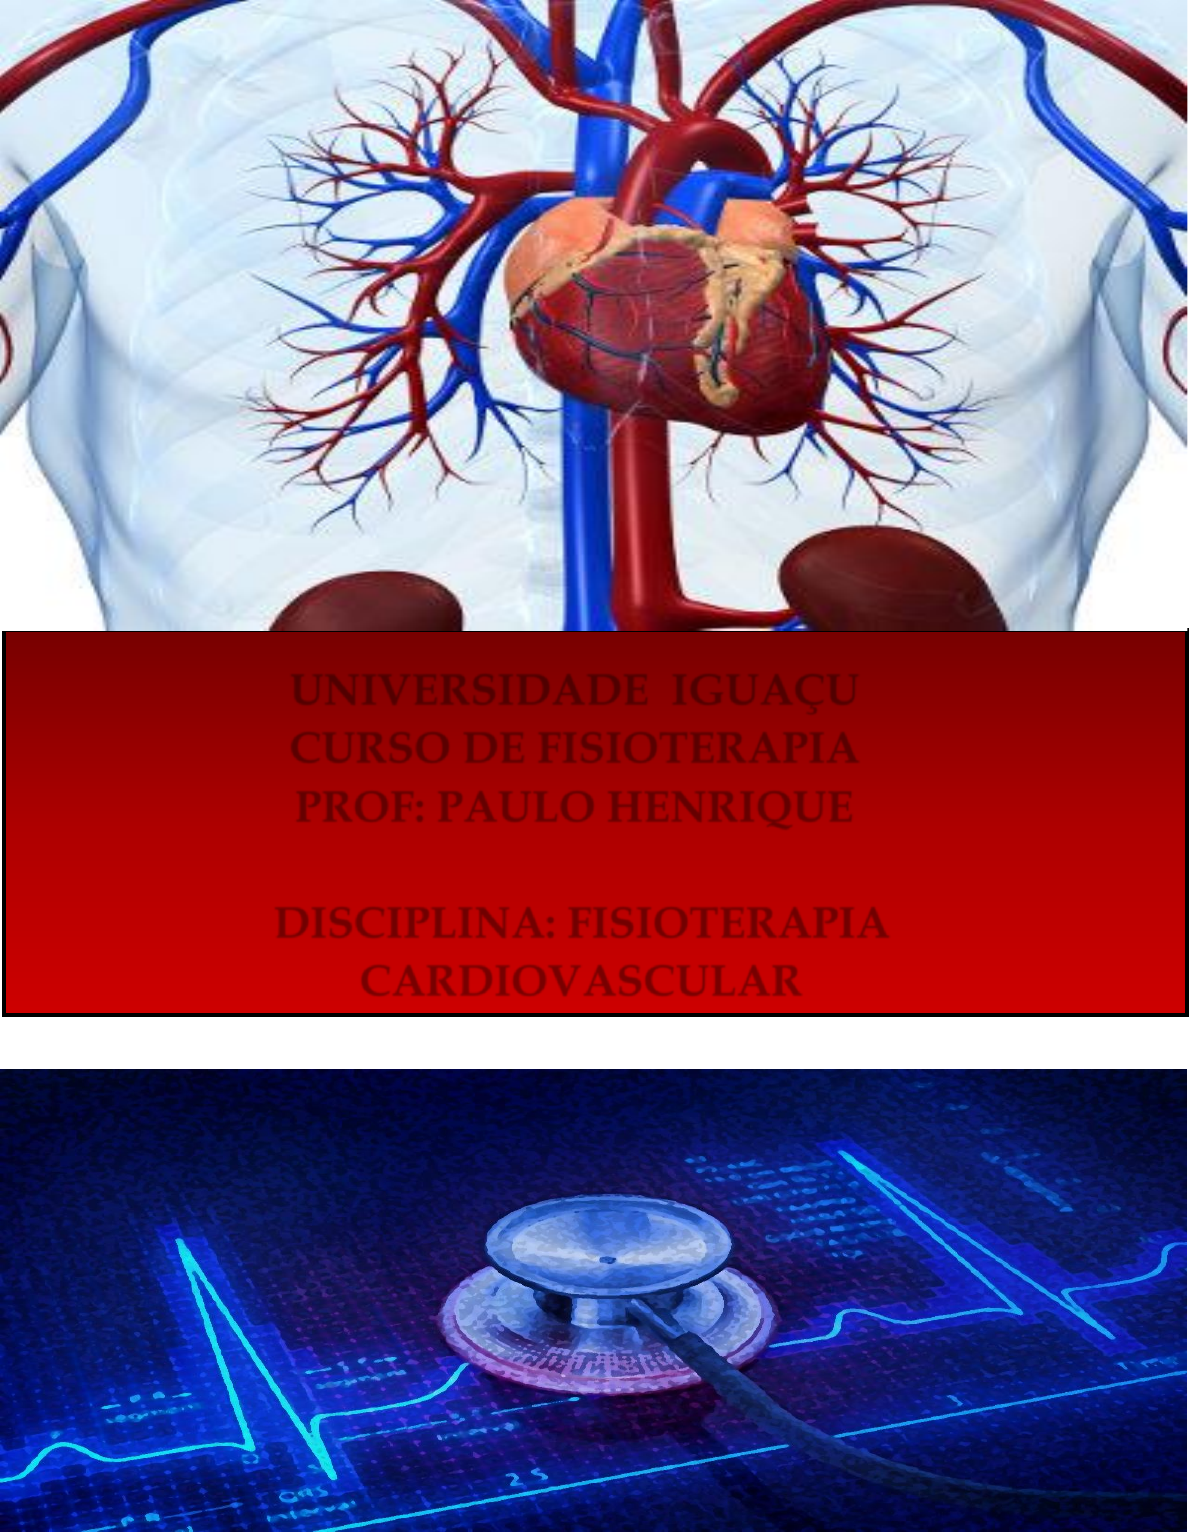 Apostila Cardio- Clinica (5) - Fisioterapia